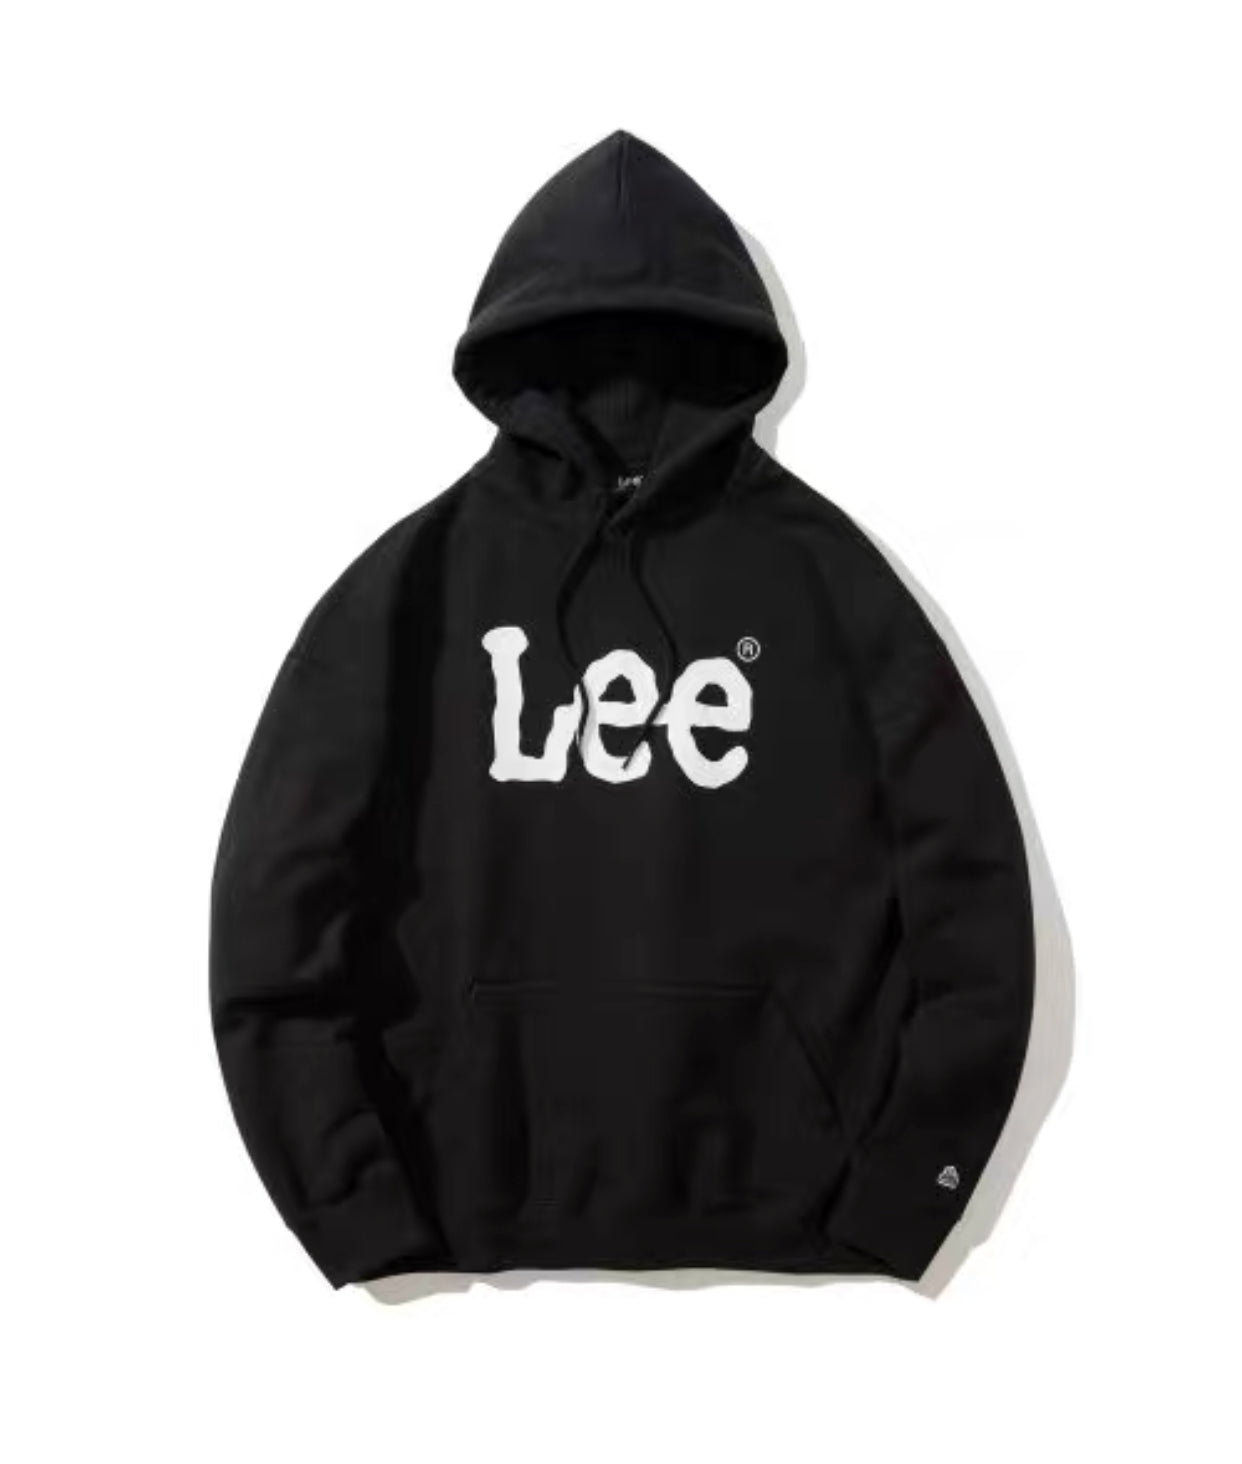 Lee Signature Logo Hoodie Black